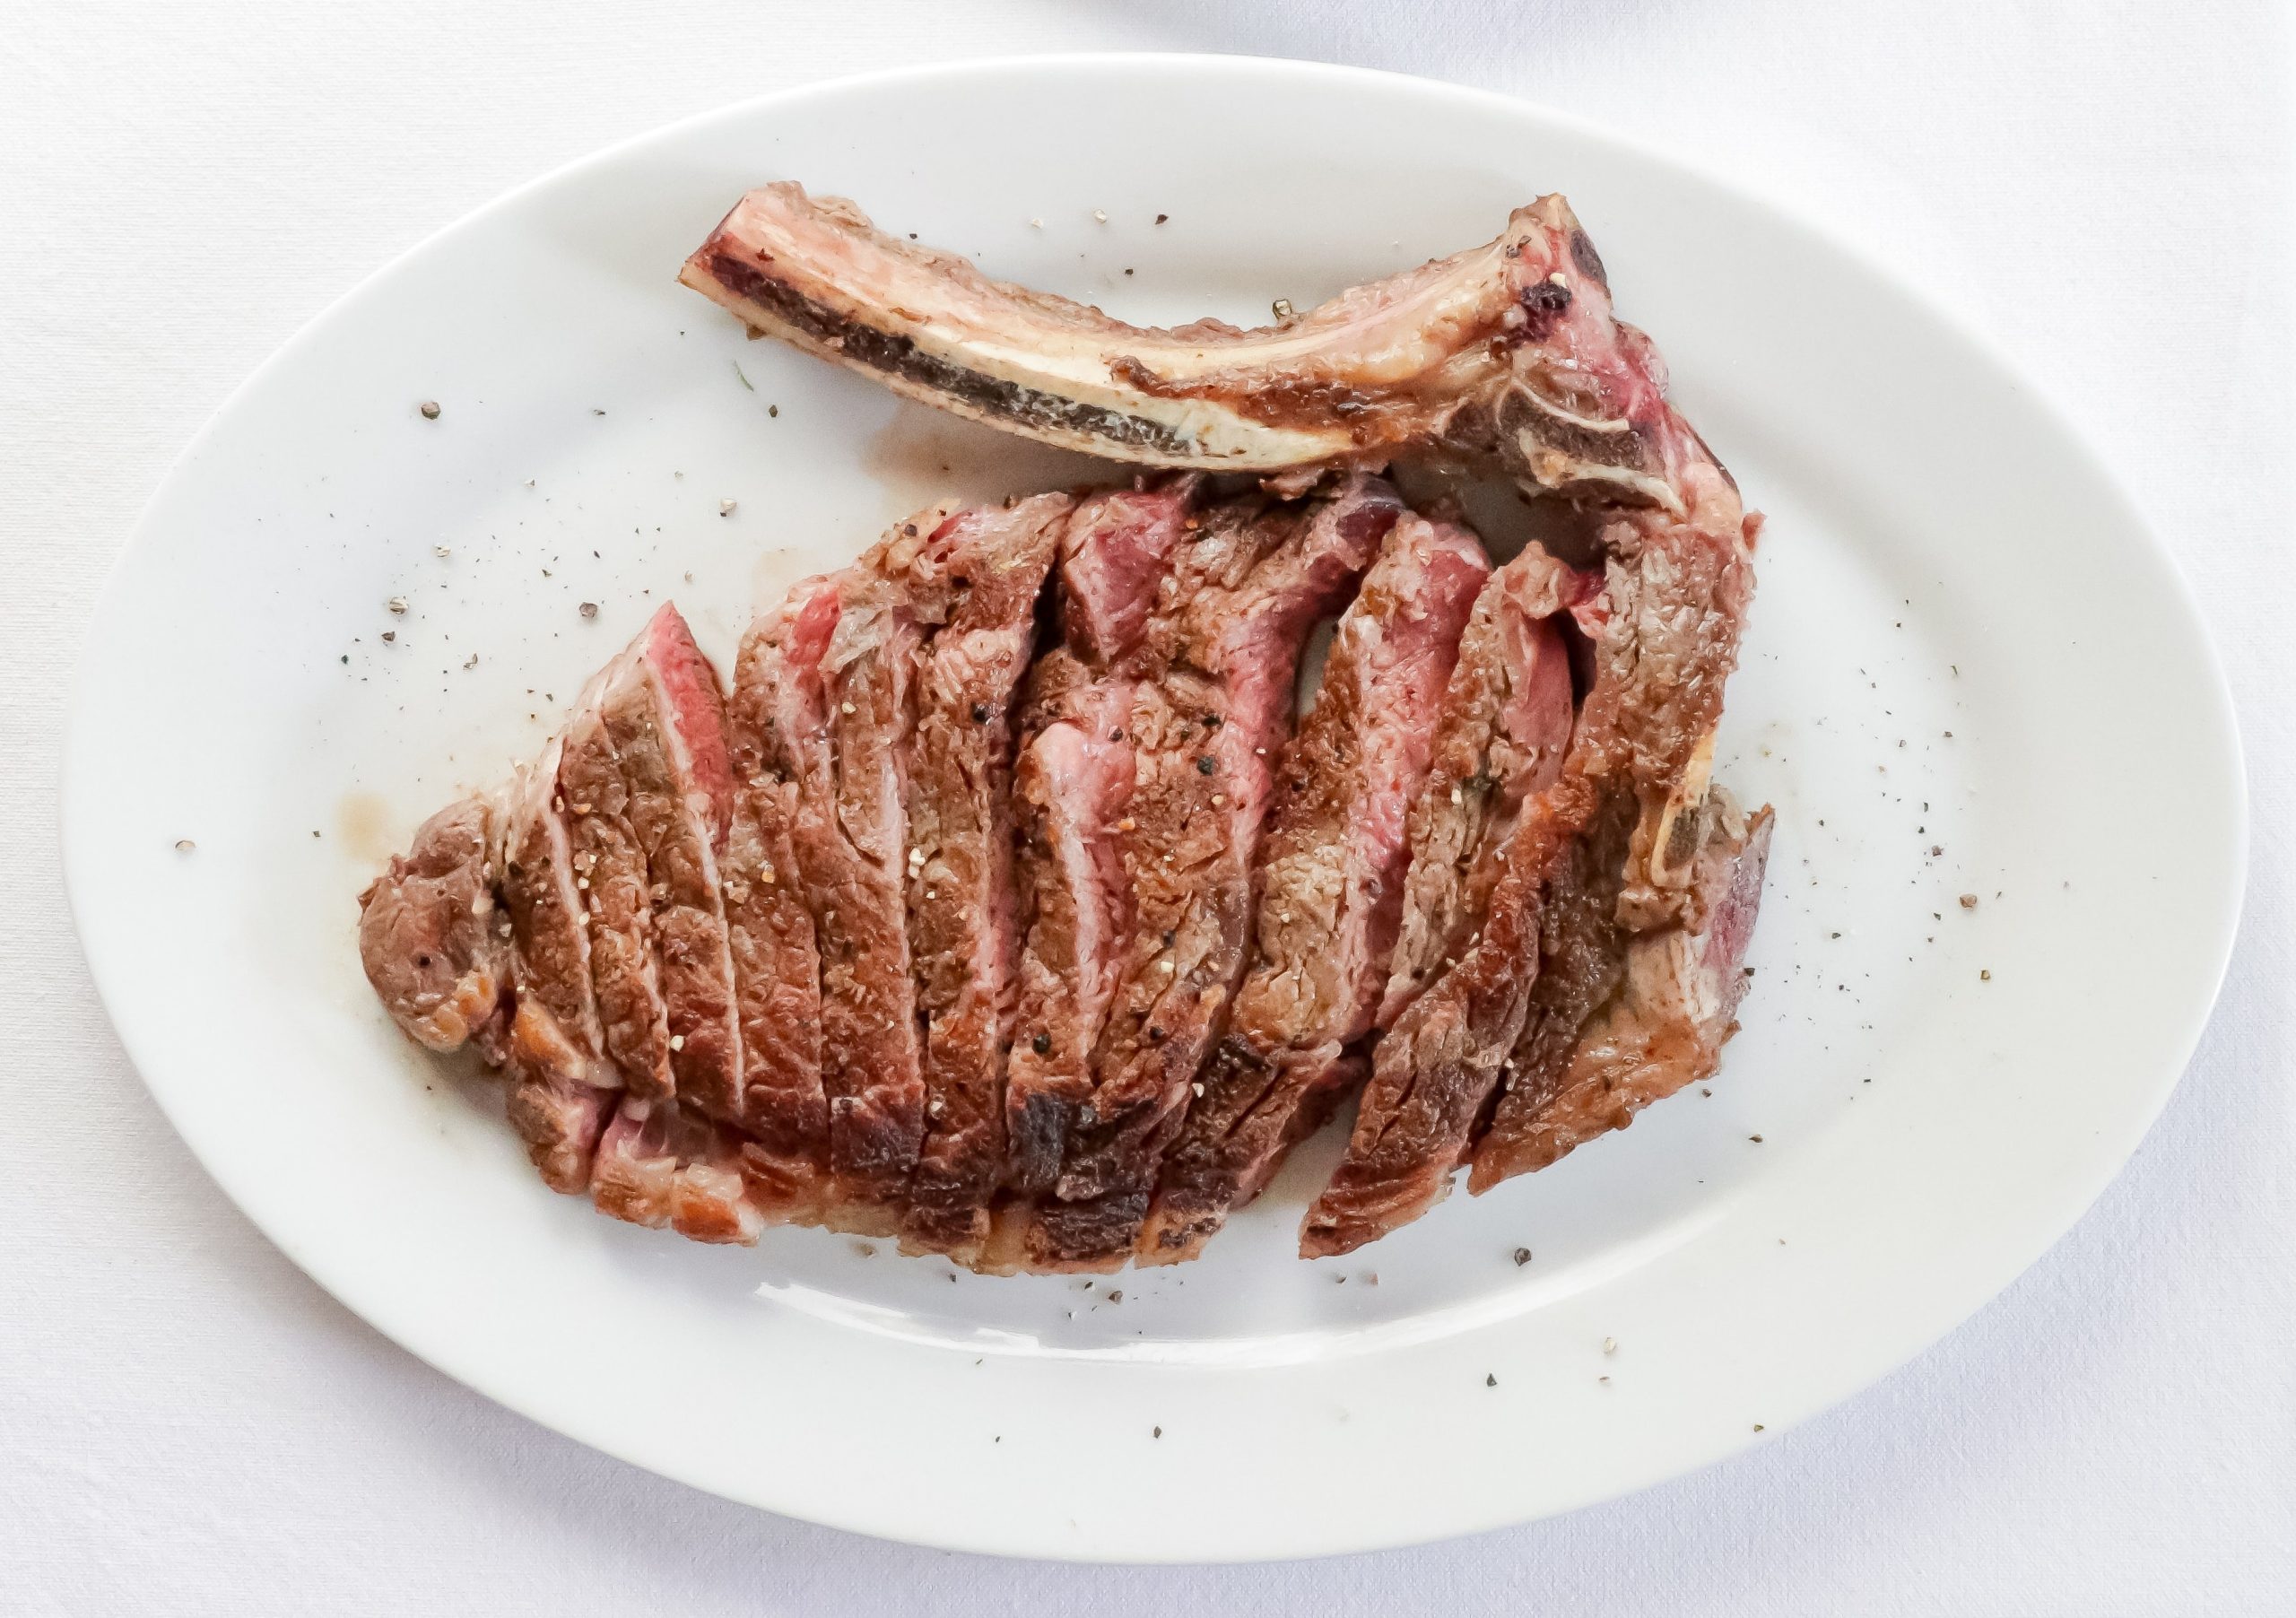 A medium rare steak on a plate cut into strips